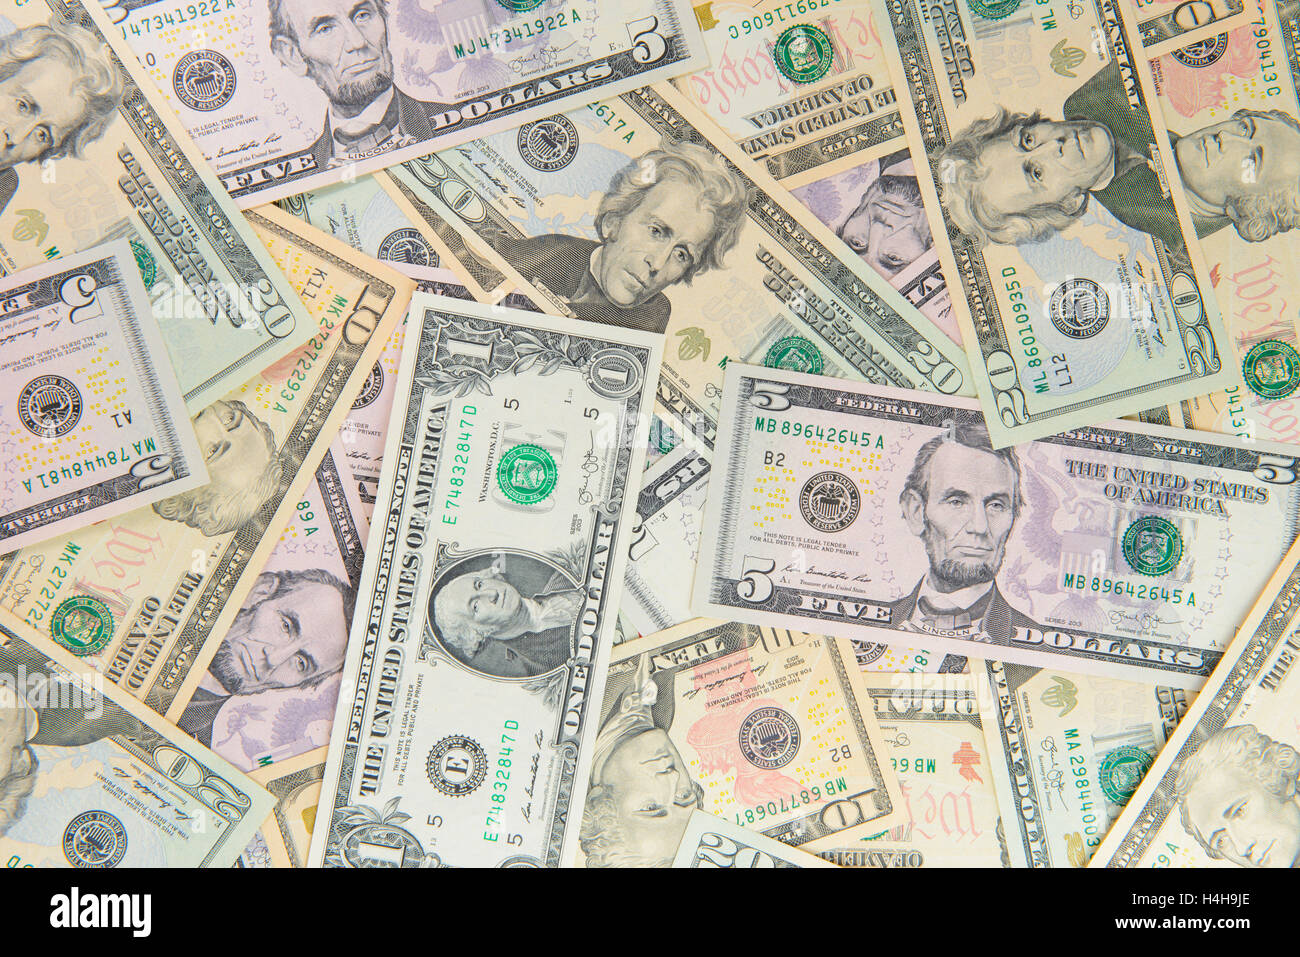 Background with money american dollar bills Stock Photo